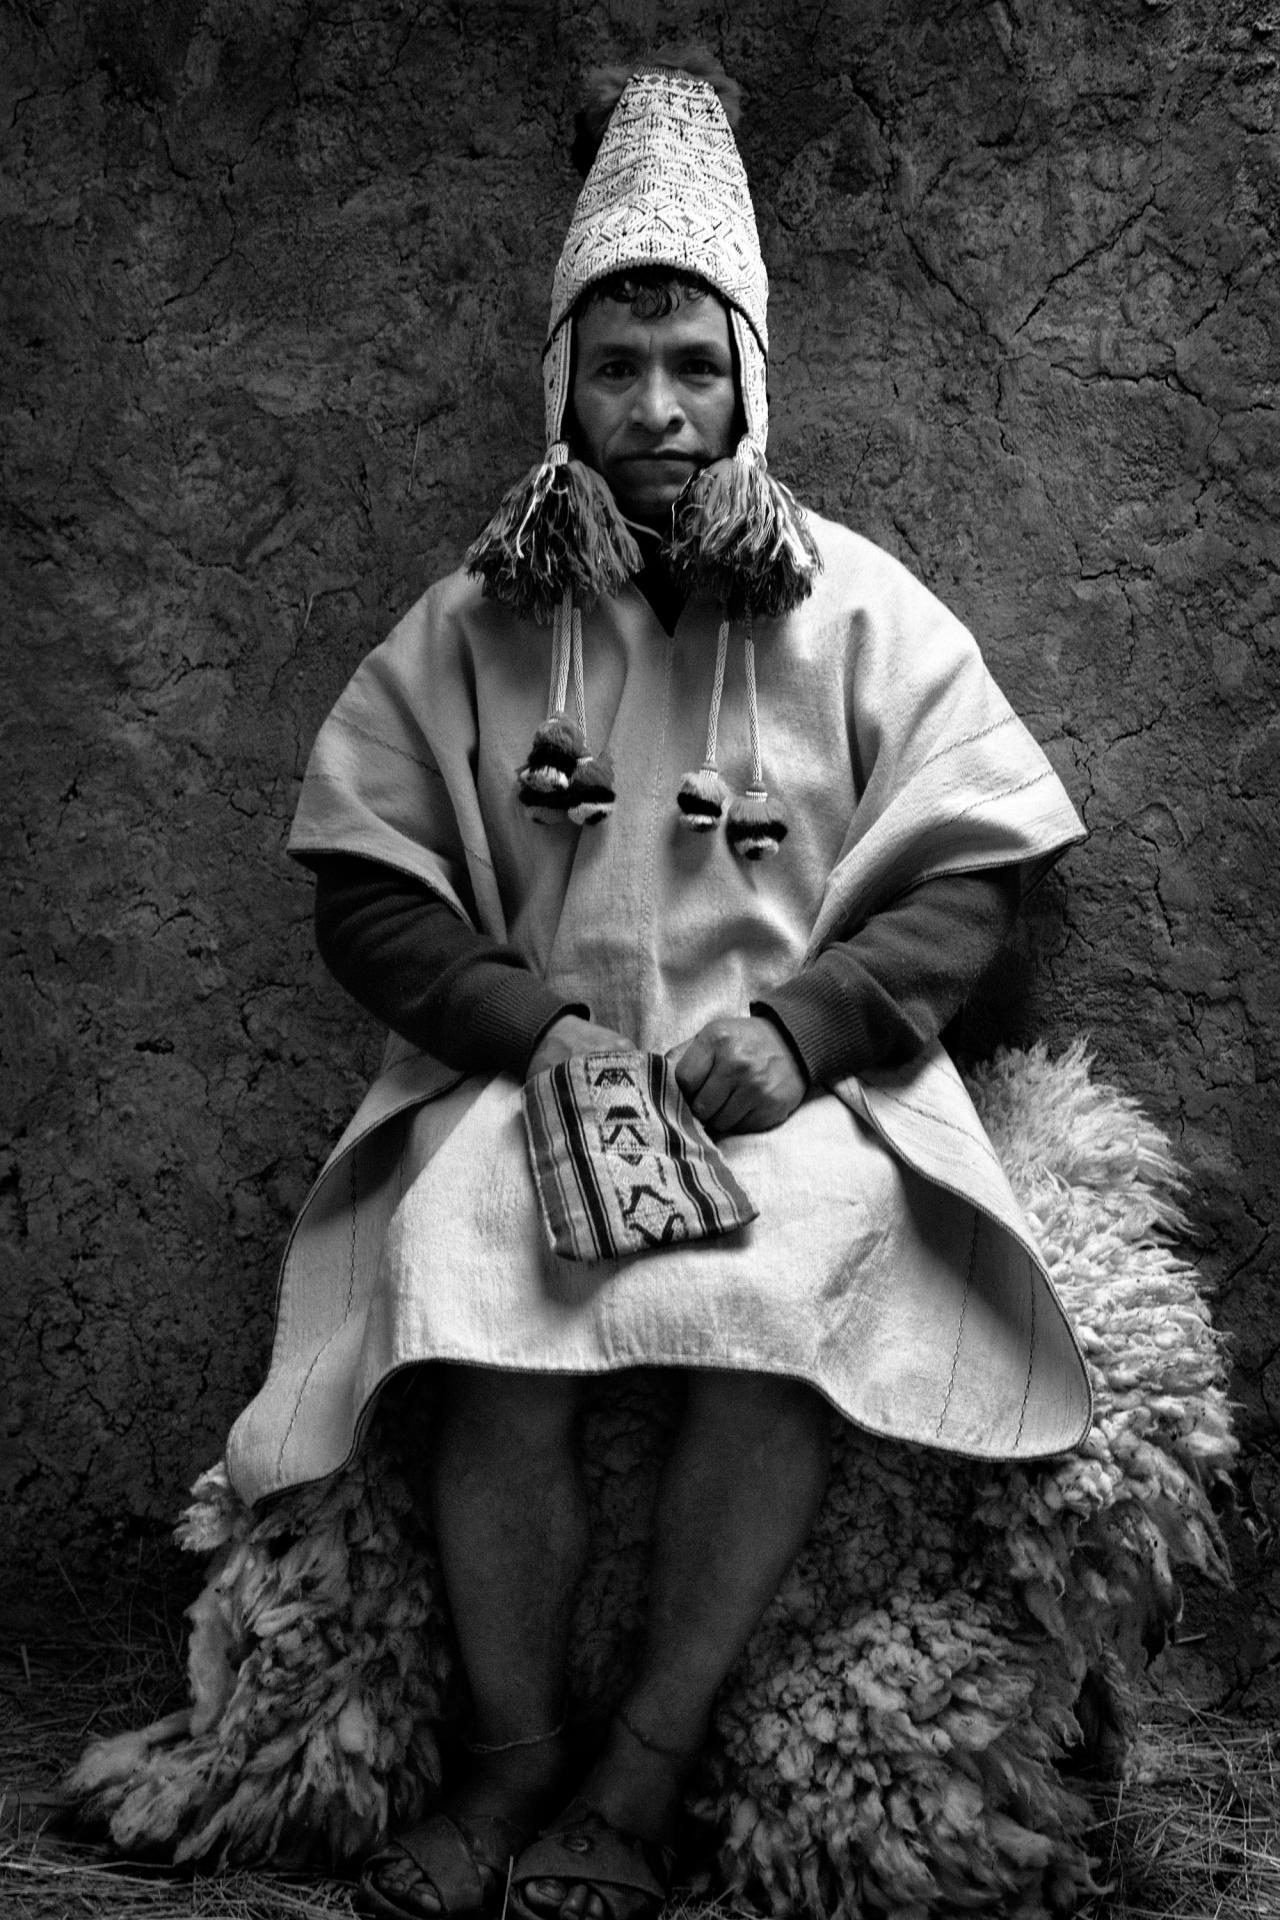 New York Photography Awards Winner - Q'ero |The Last of the Incas 